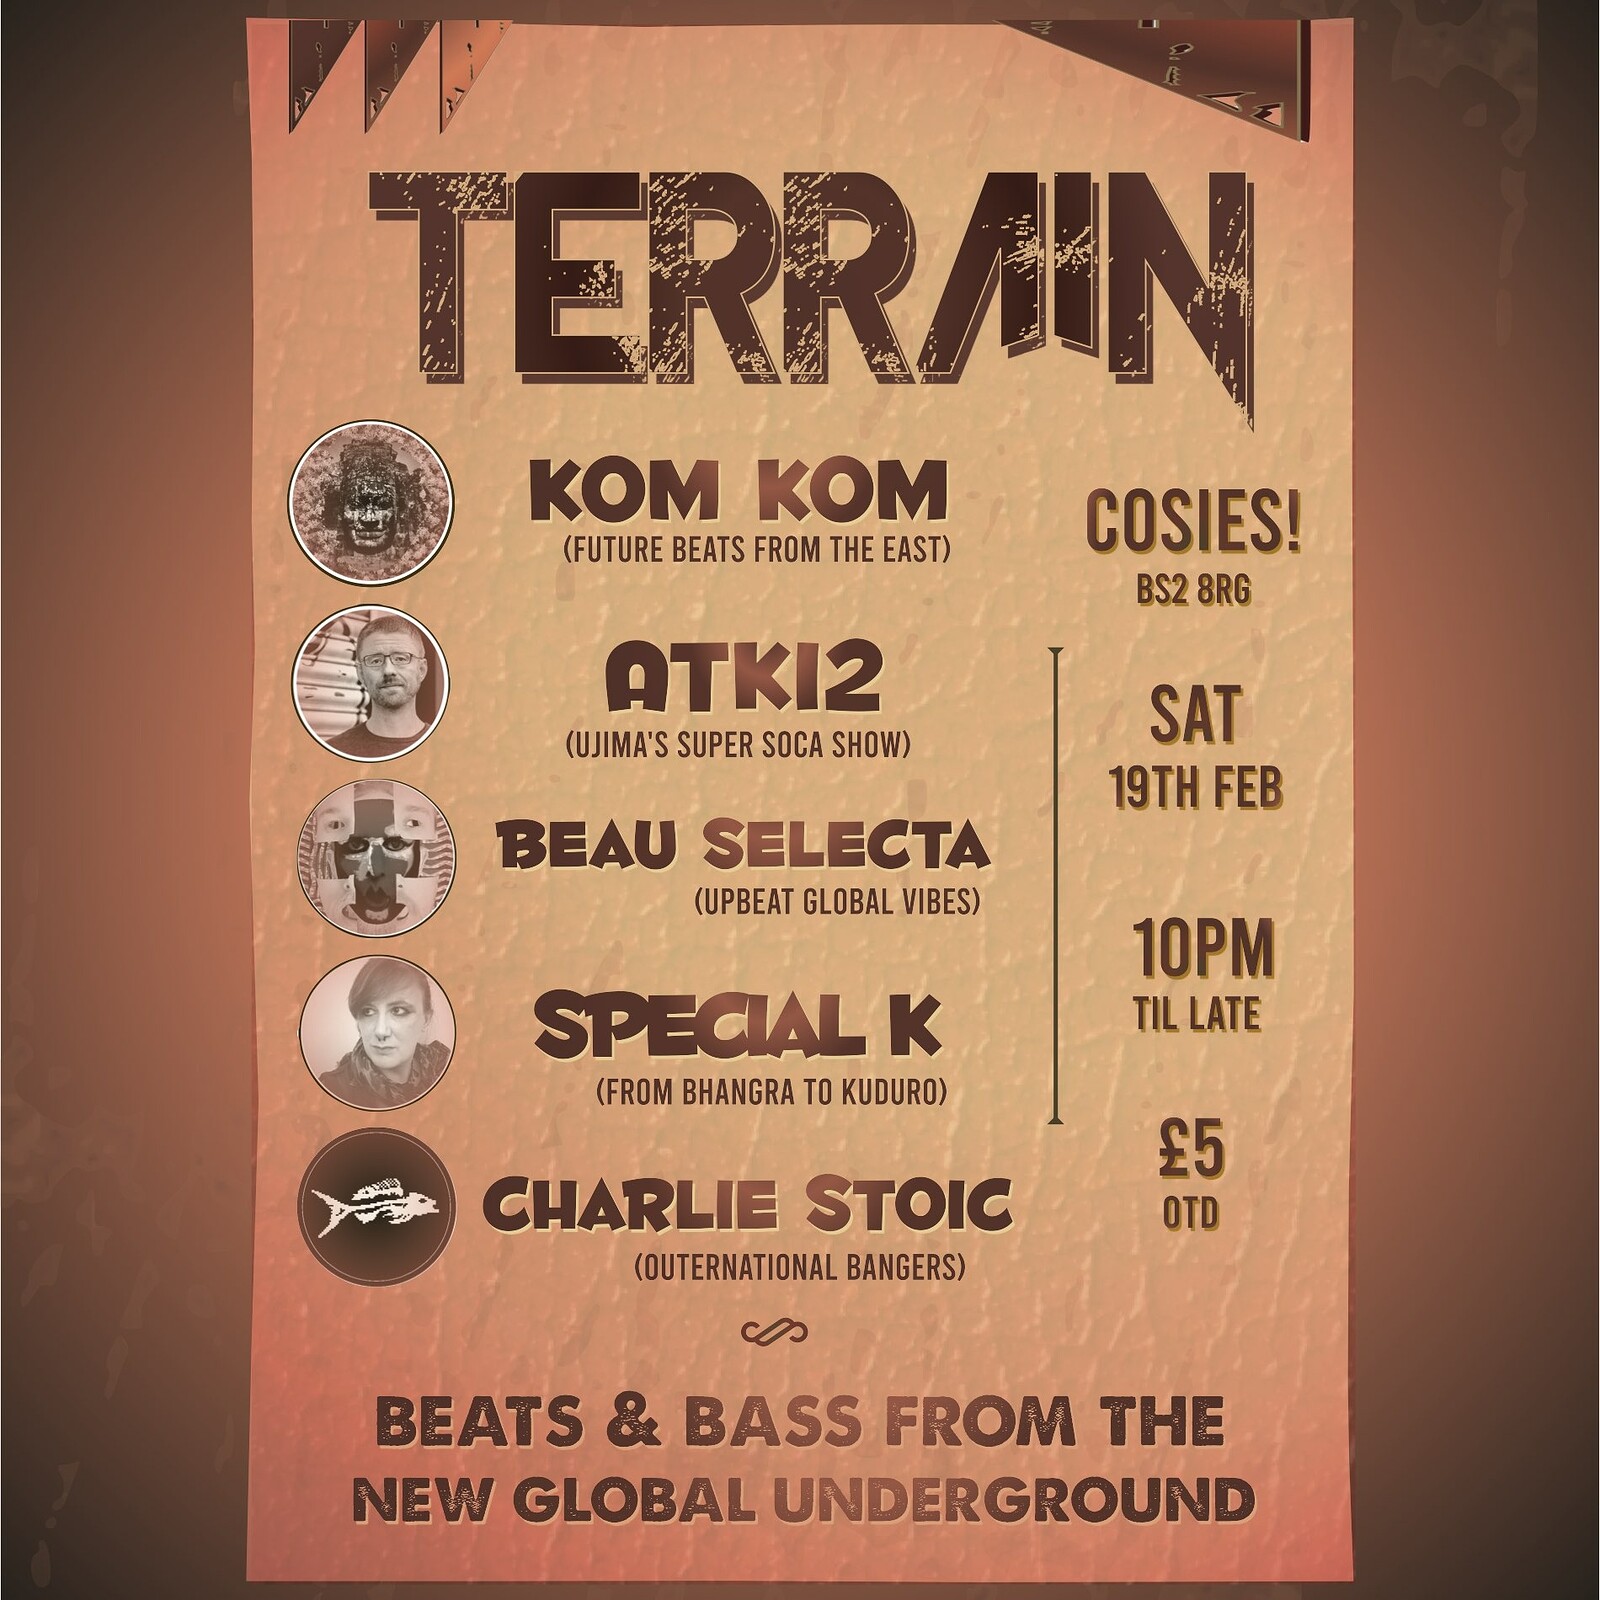 TERRAIN - Global Beats & Bass at Cosies